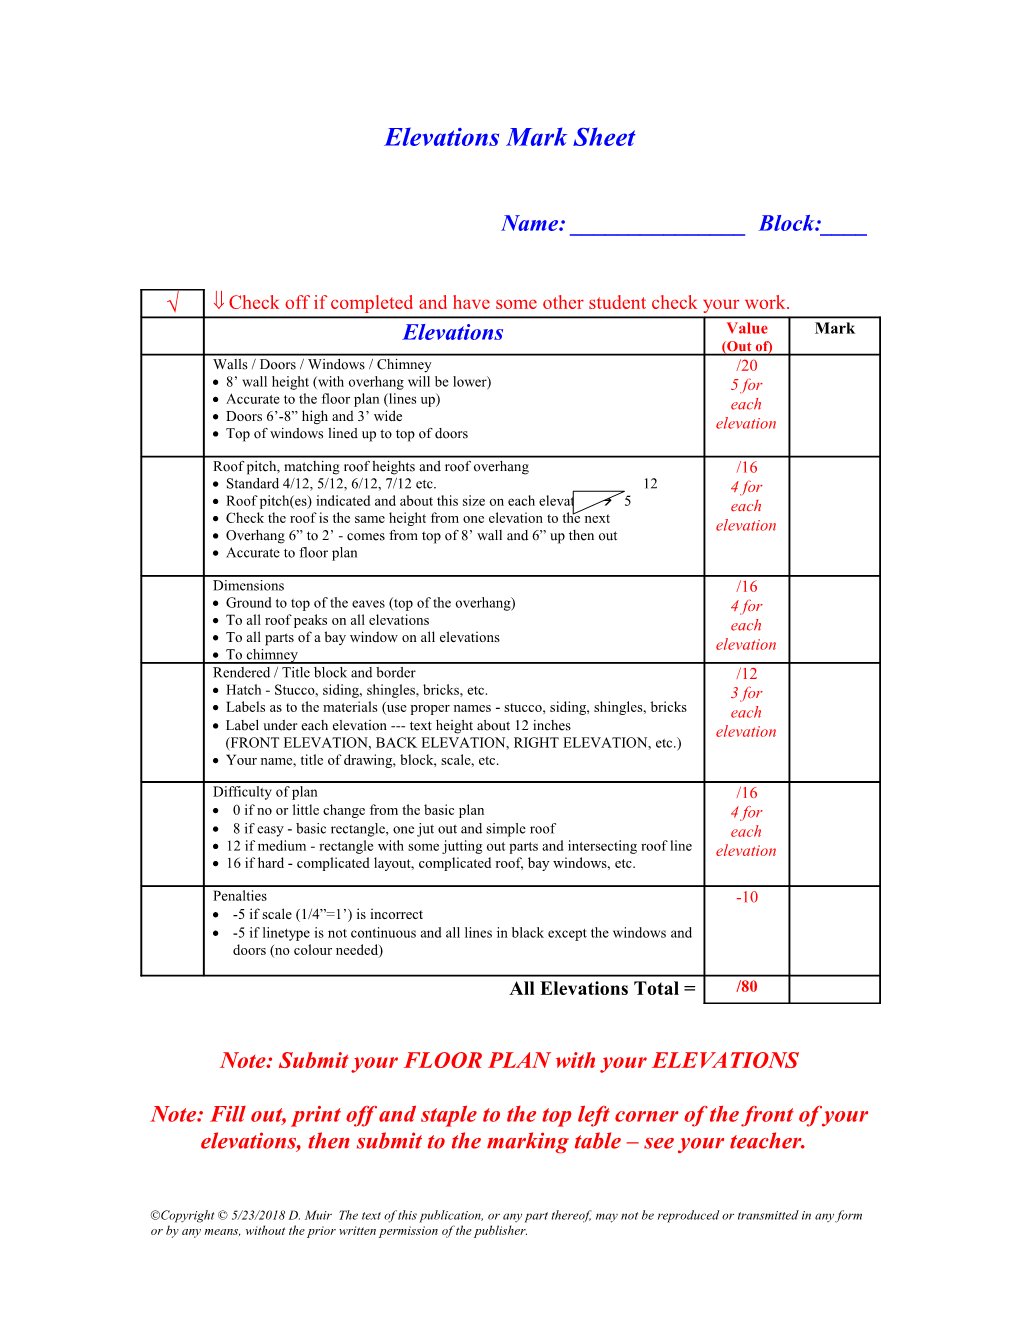 Autocad Elevations Mark Sheet